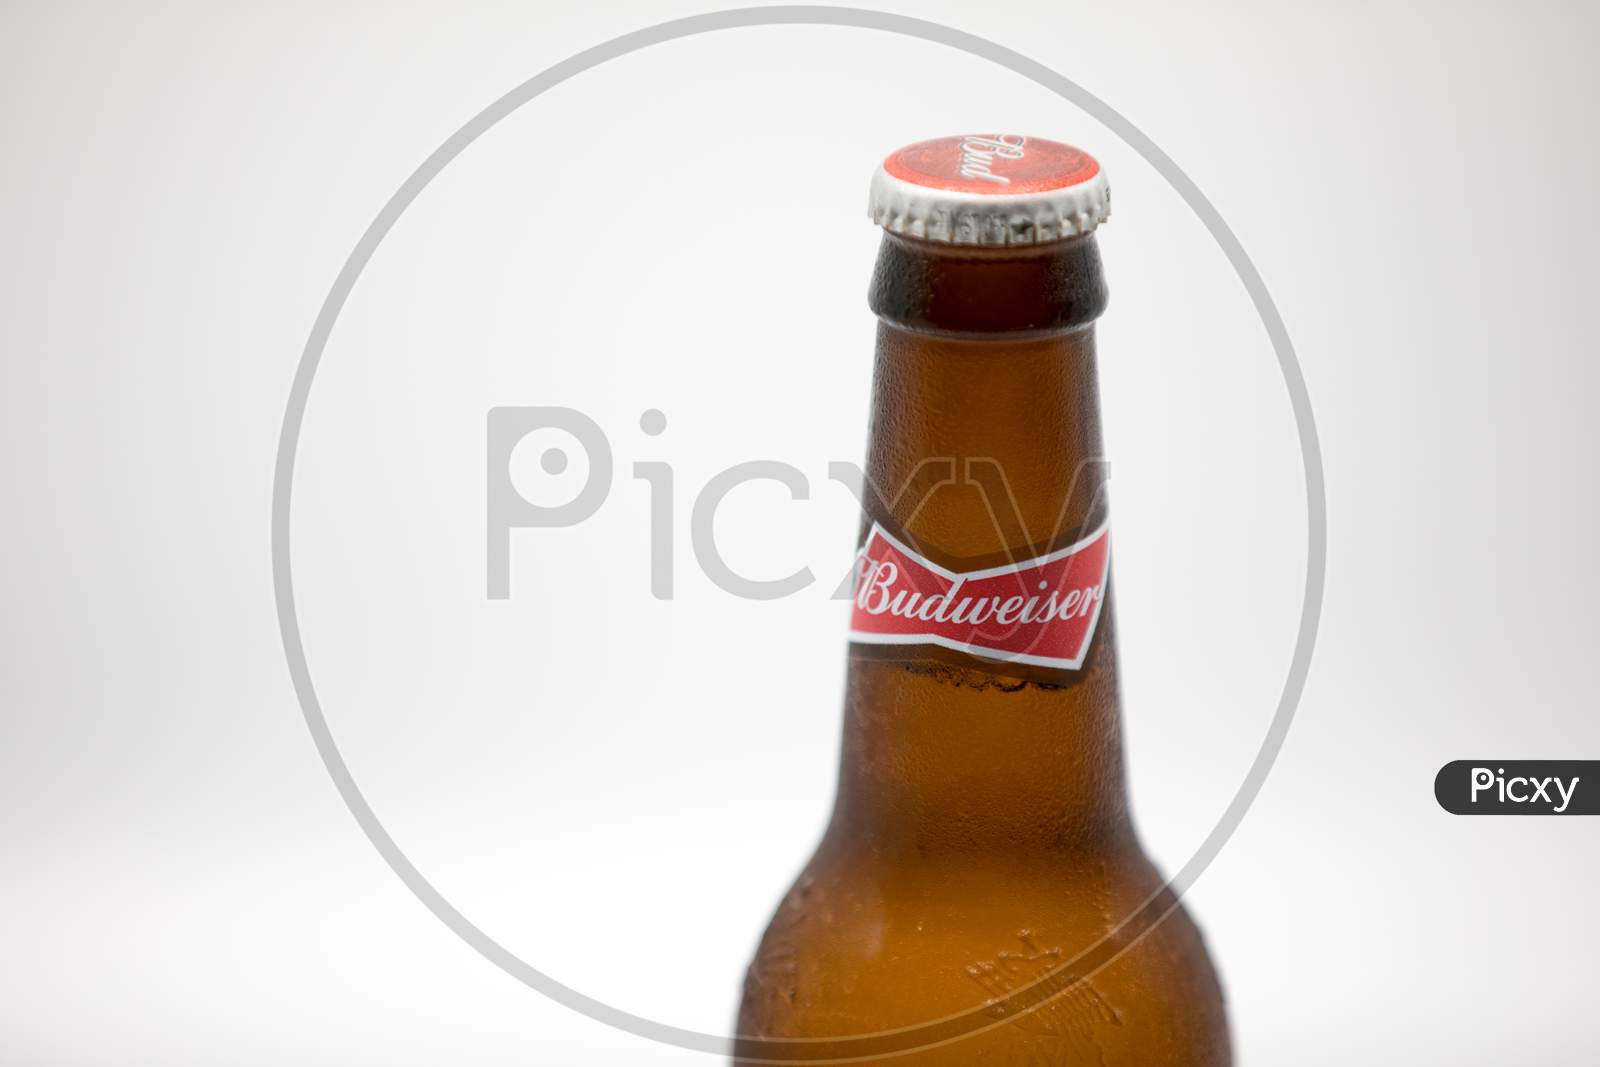 Bottle of Budweiser beer on white background